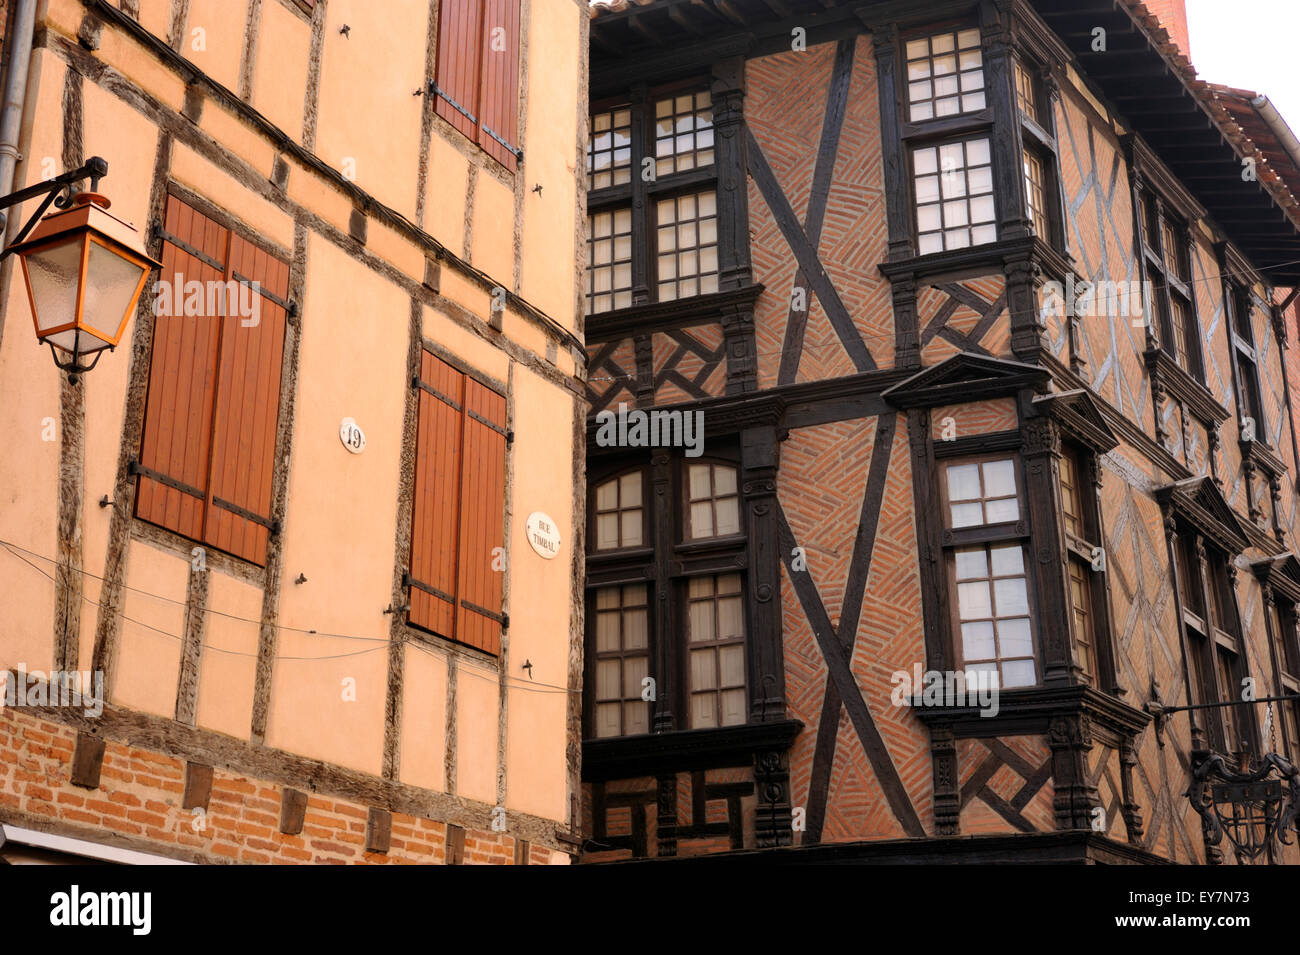 France, Albi, half timbered houses Stock Photo